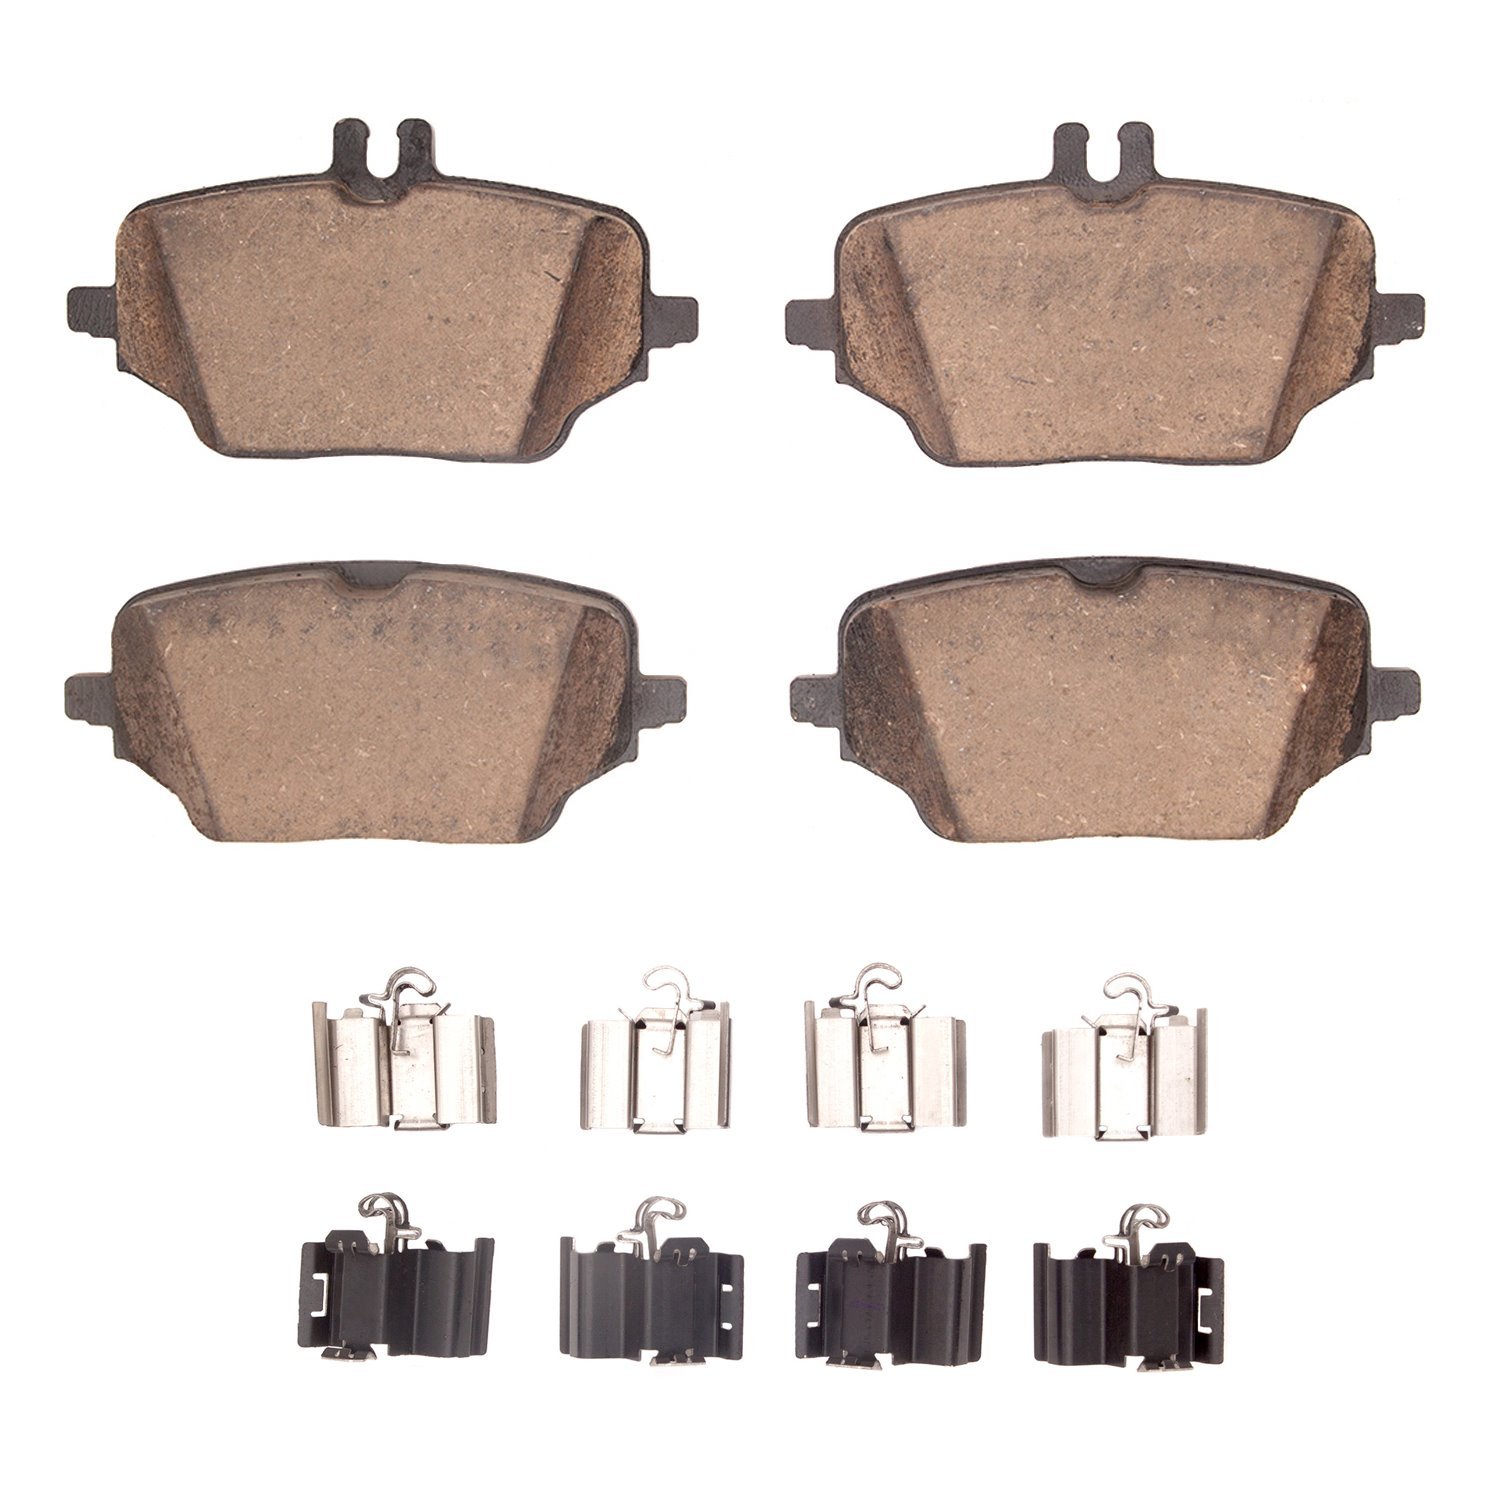 1600-2235-01 5000 Euro Ceramic Brake Pads & Hardware Kit, Fits Select Mercedes-Benz, Position: Rear